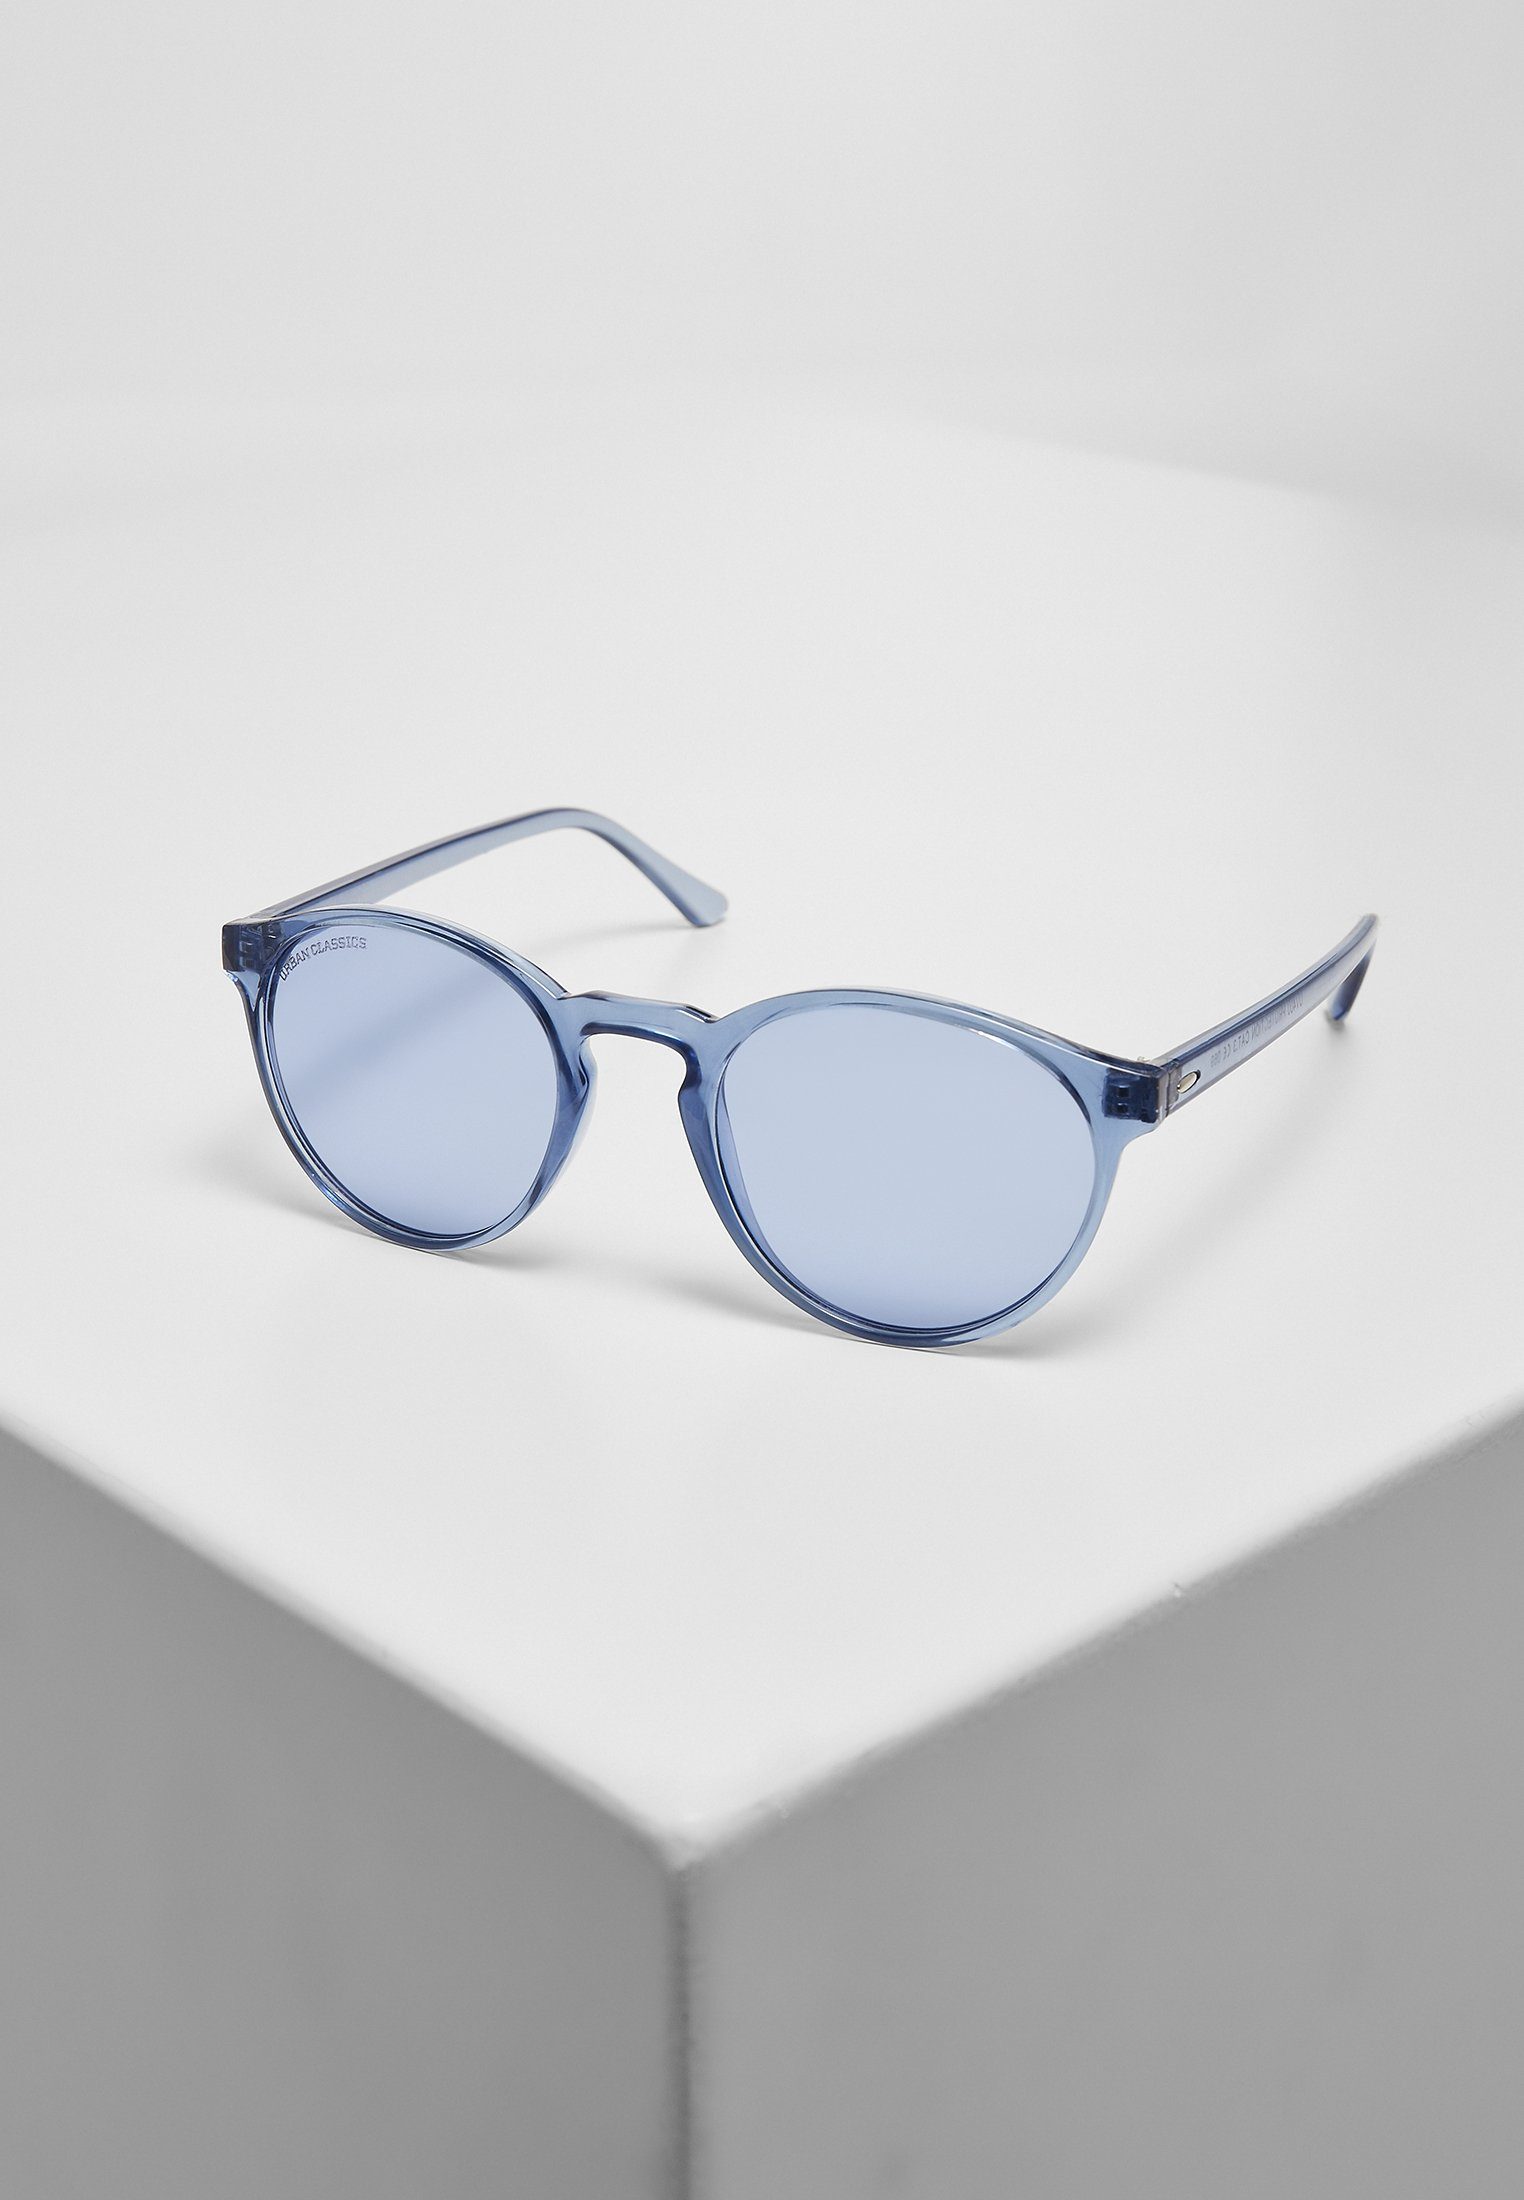 Cypress Unisex URBAN Sonnenbrille black+brown+blue Sunglasses CLASSICS 3-Pack